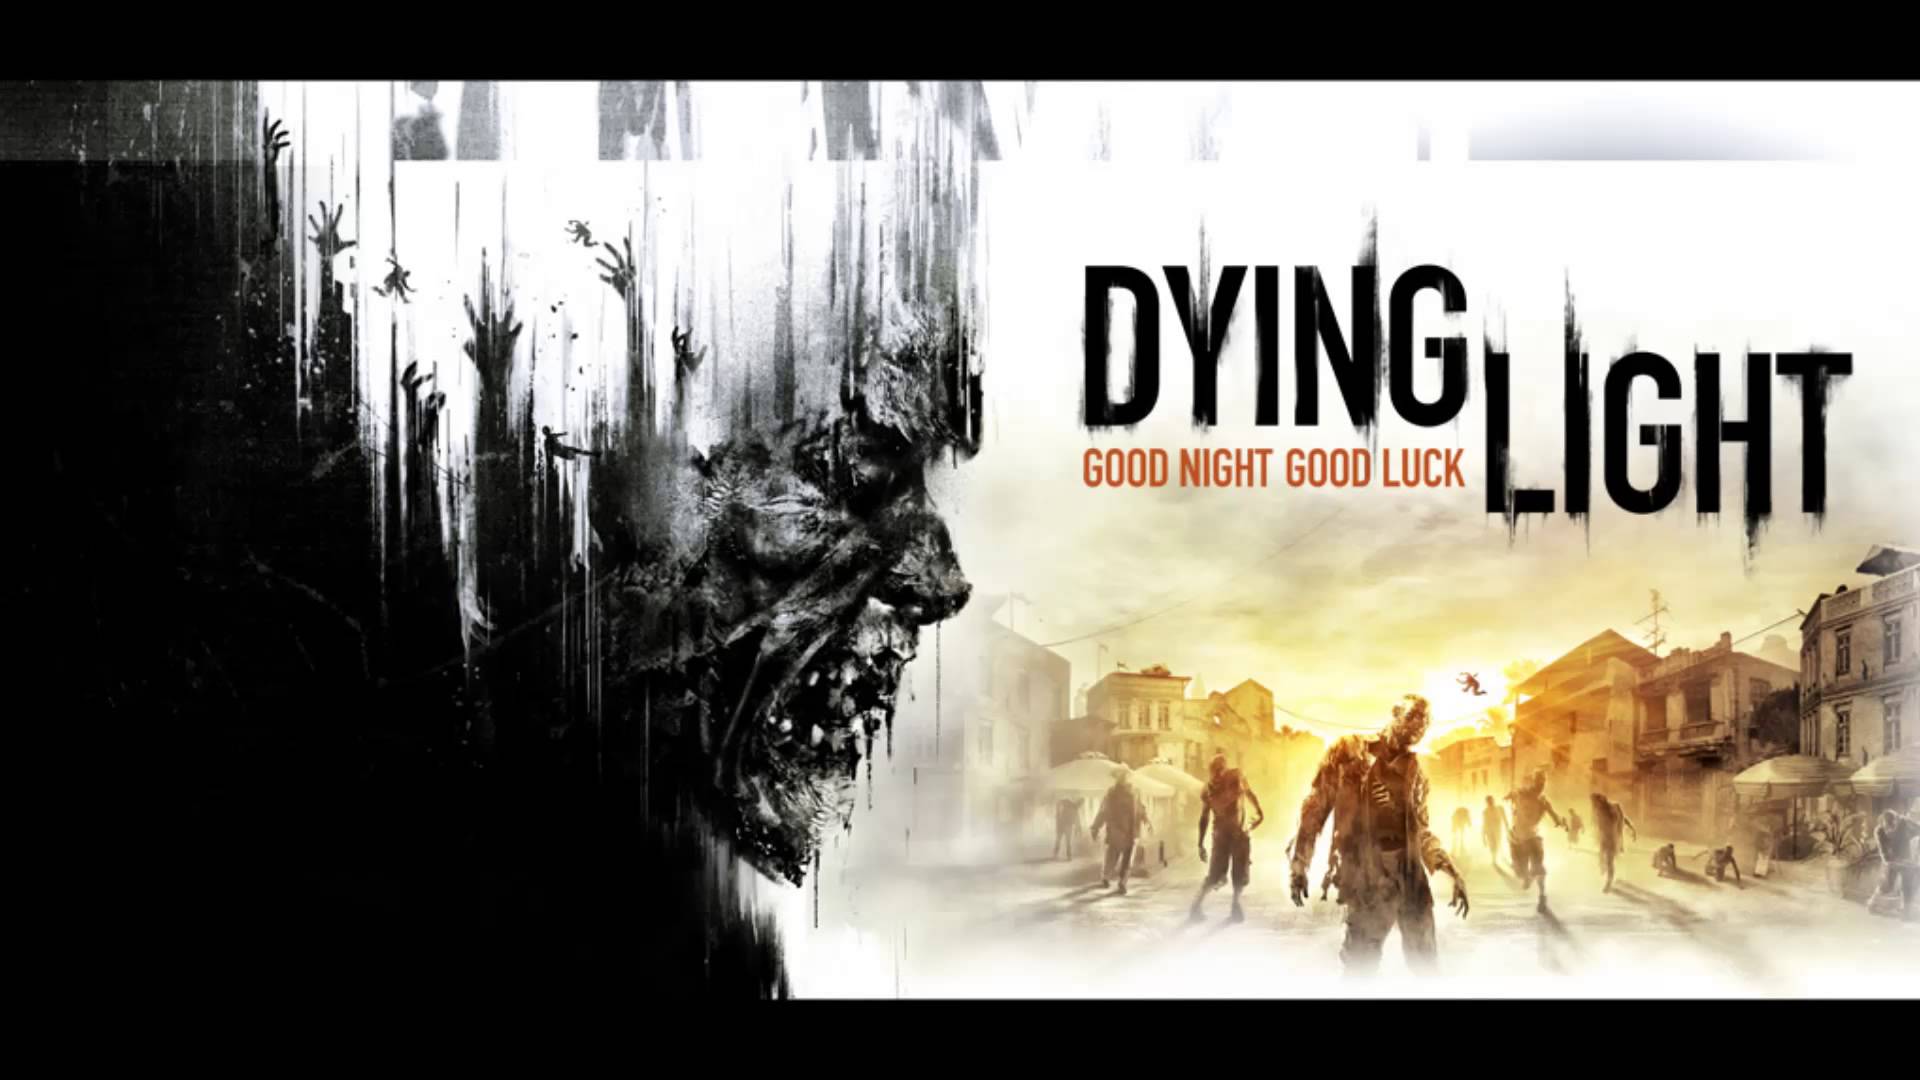 Dying Light. Full HD Widescreen wallpaper for desktop